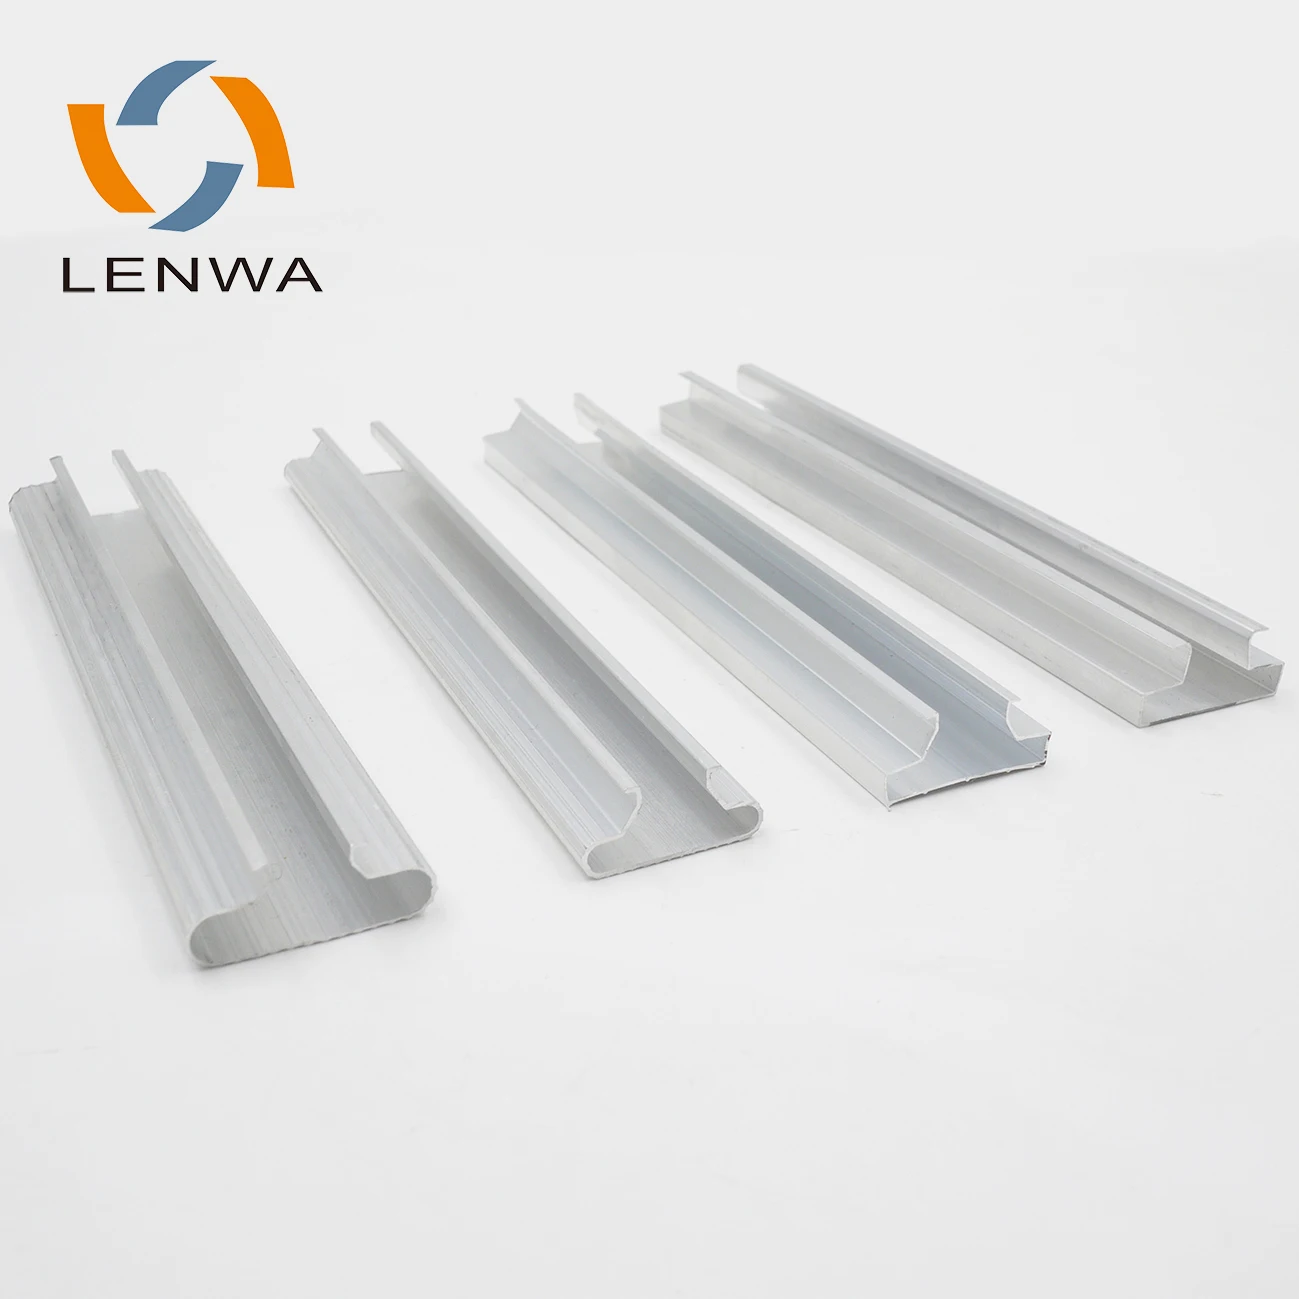 
Lenwa Aluminum Factory 6063-T5 extrusion profile Supermarket display slat wall ready to ship 